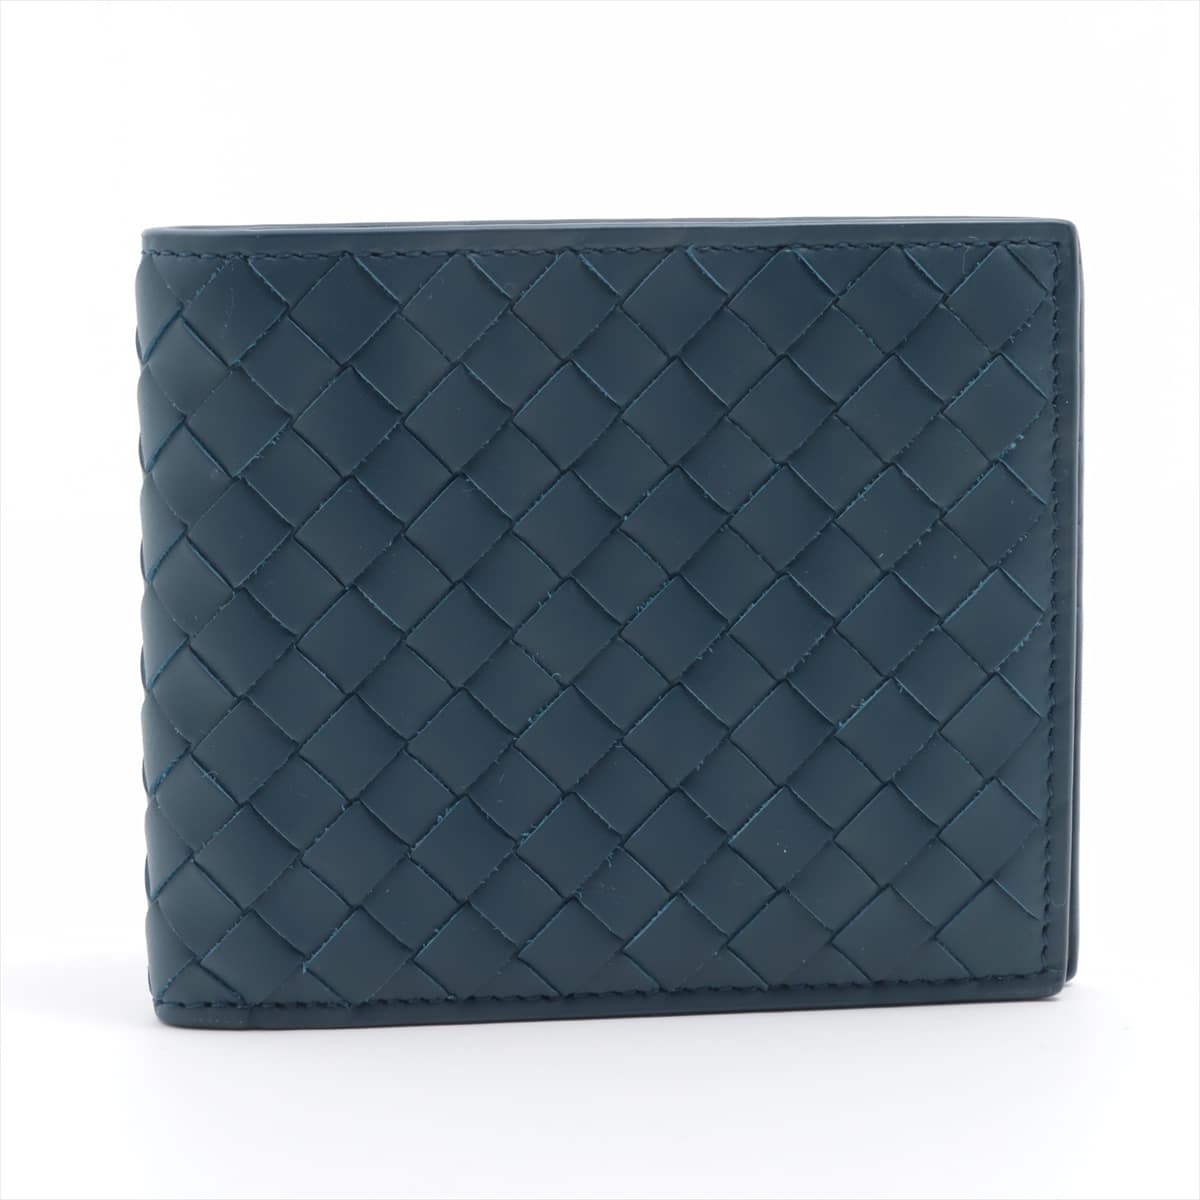 Bottega Veneta Intrecciato Leather Wallet Navy blue